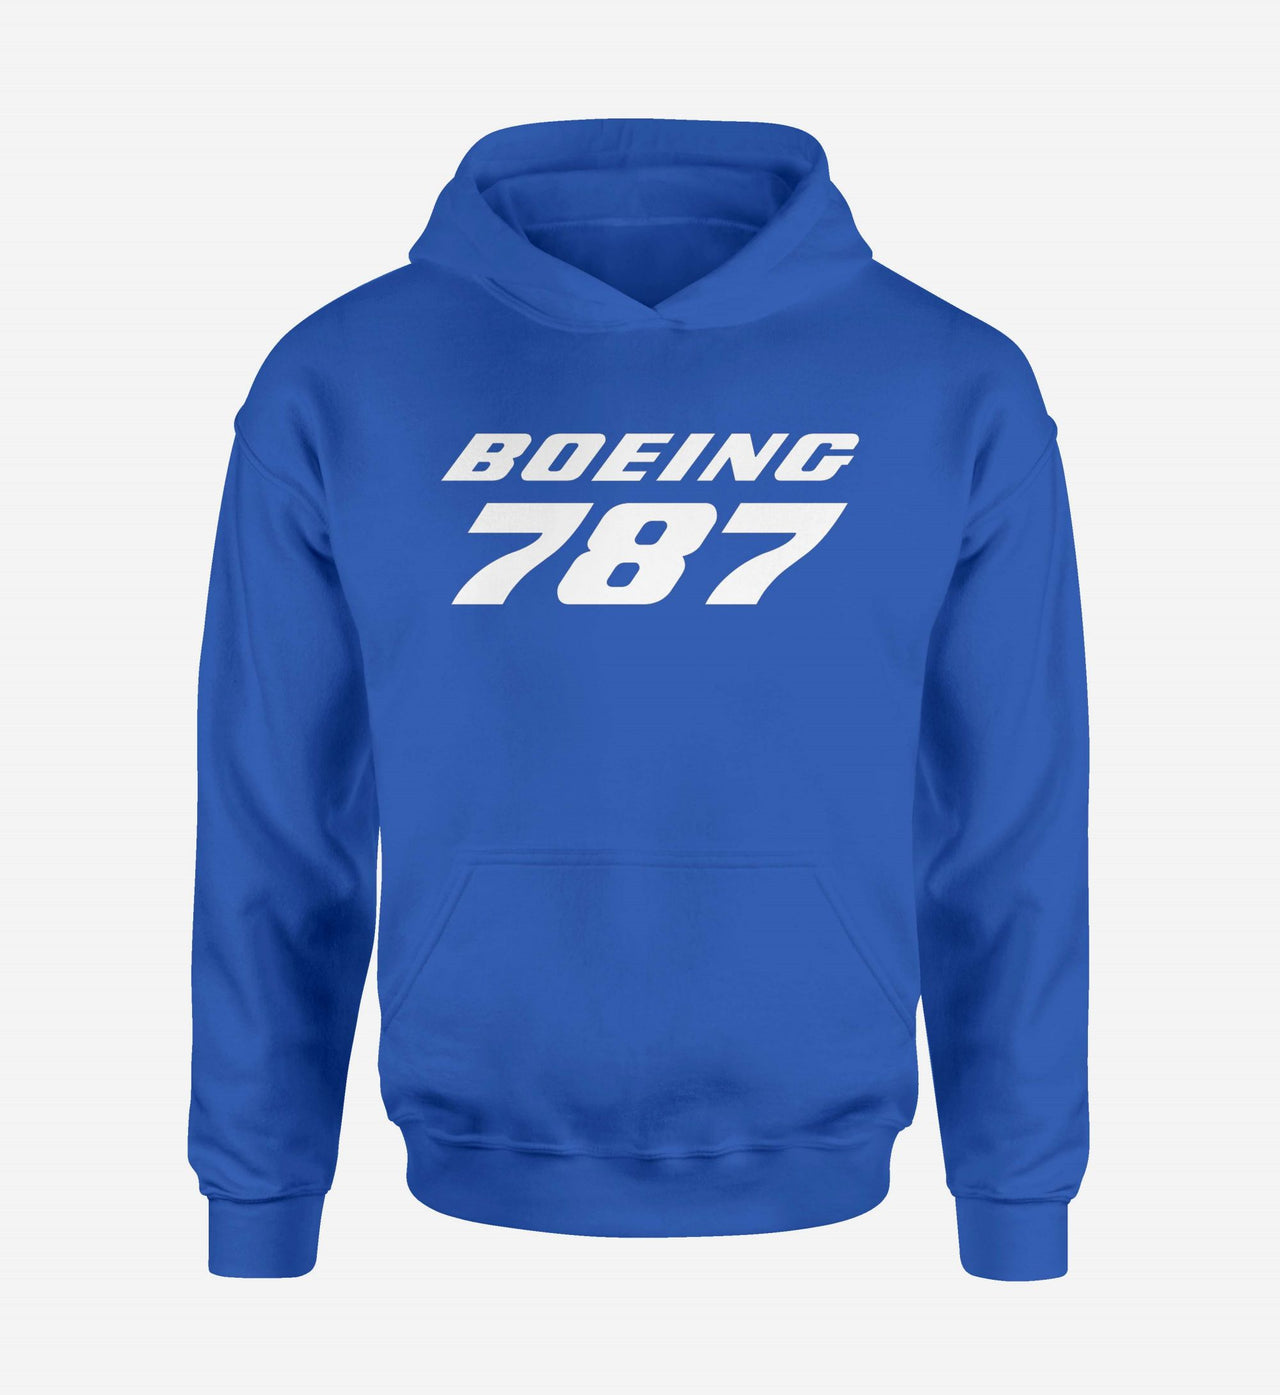 Boeing 787 & Text Designed Hoodies